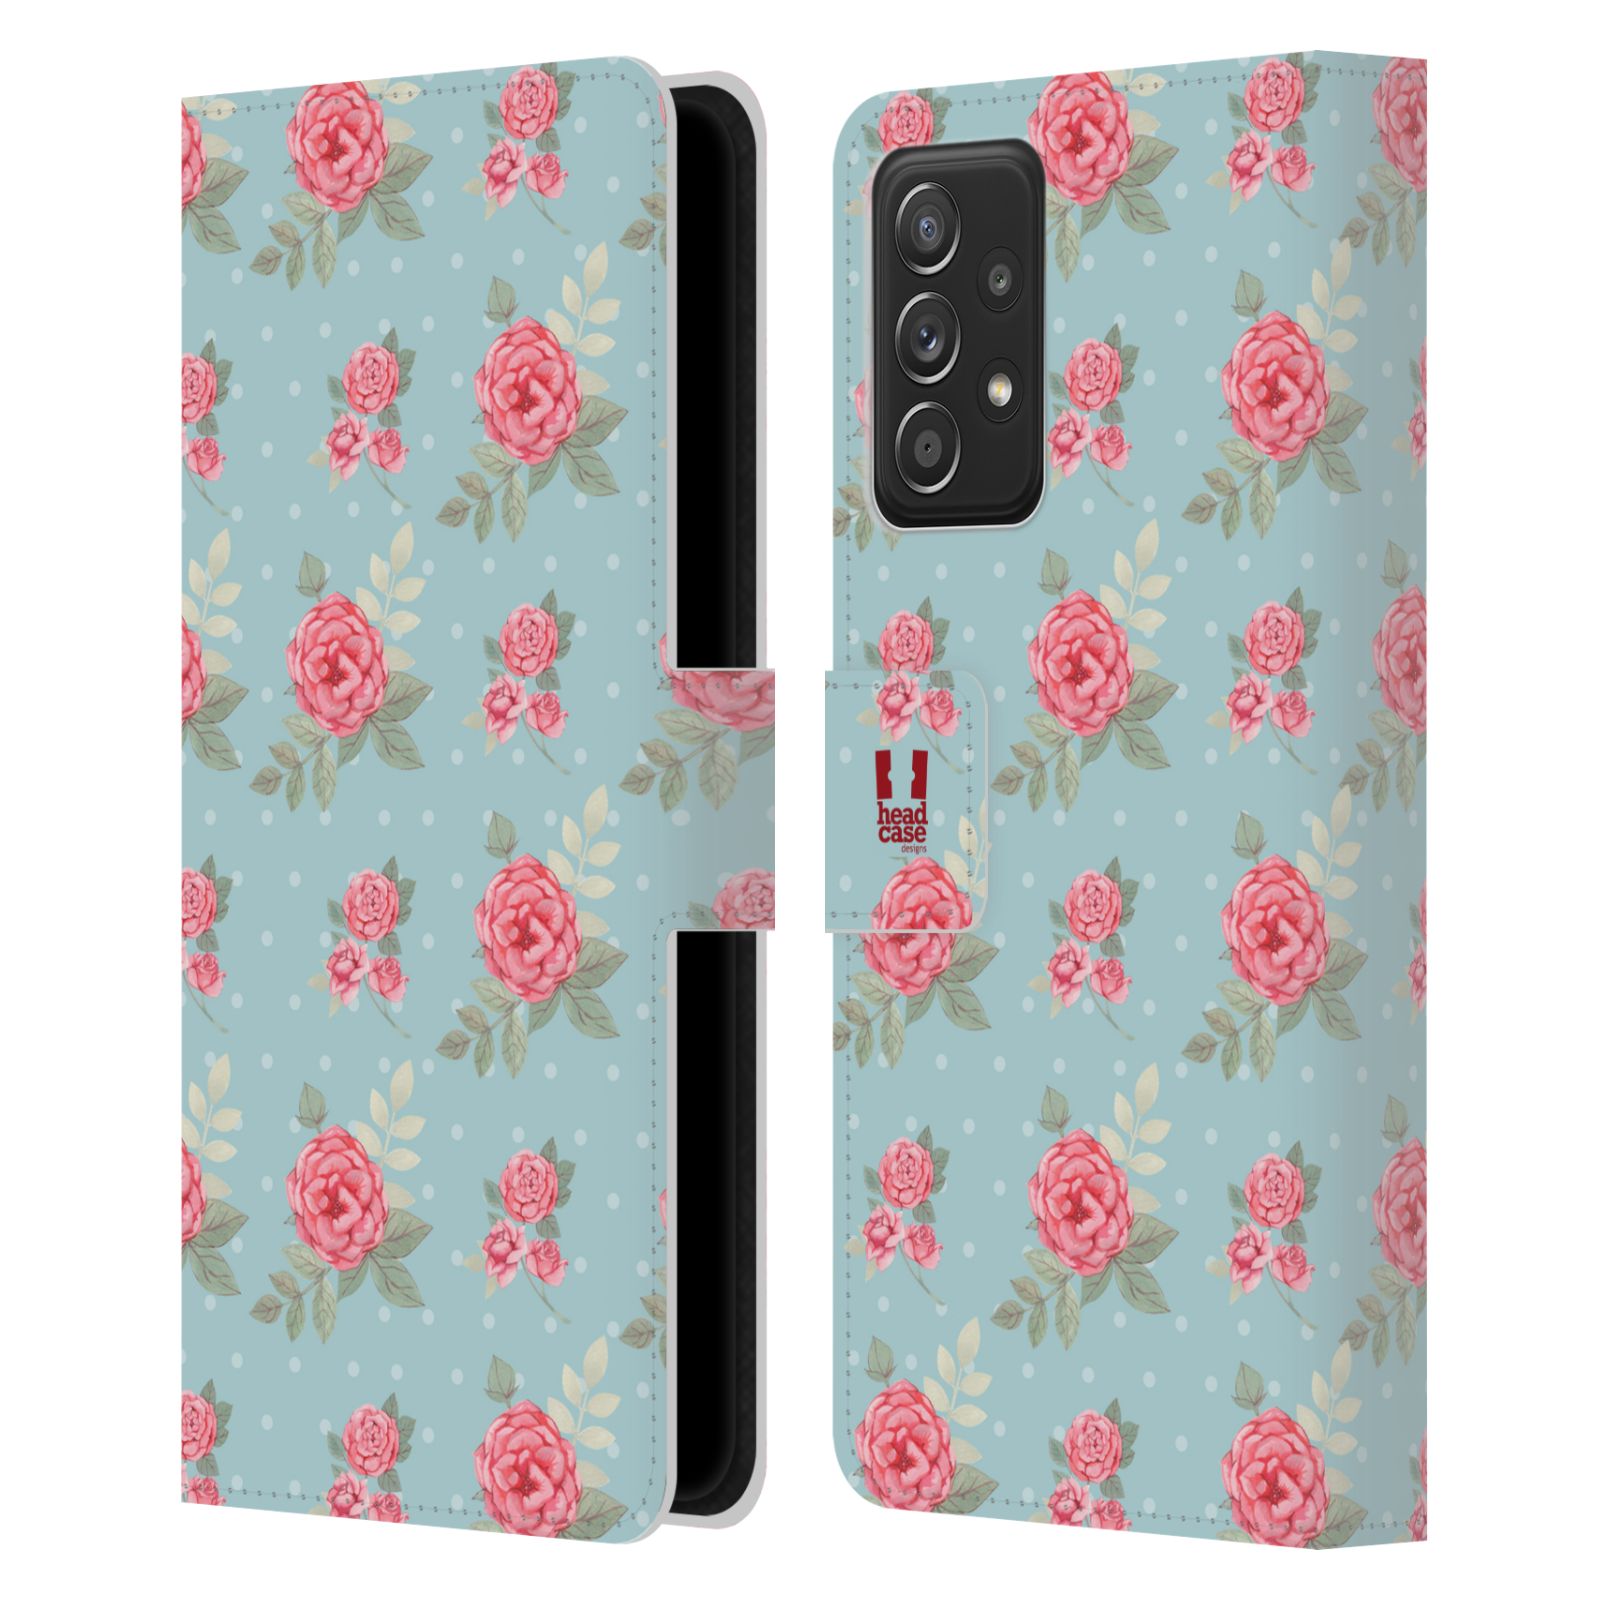 Pouzdro HEAD CASE na mobil Samsung Galaxy A52 / A52 5G / A52s 5G romantické květy anglické růže modrá a růžová